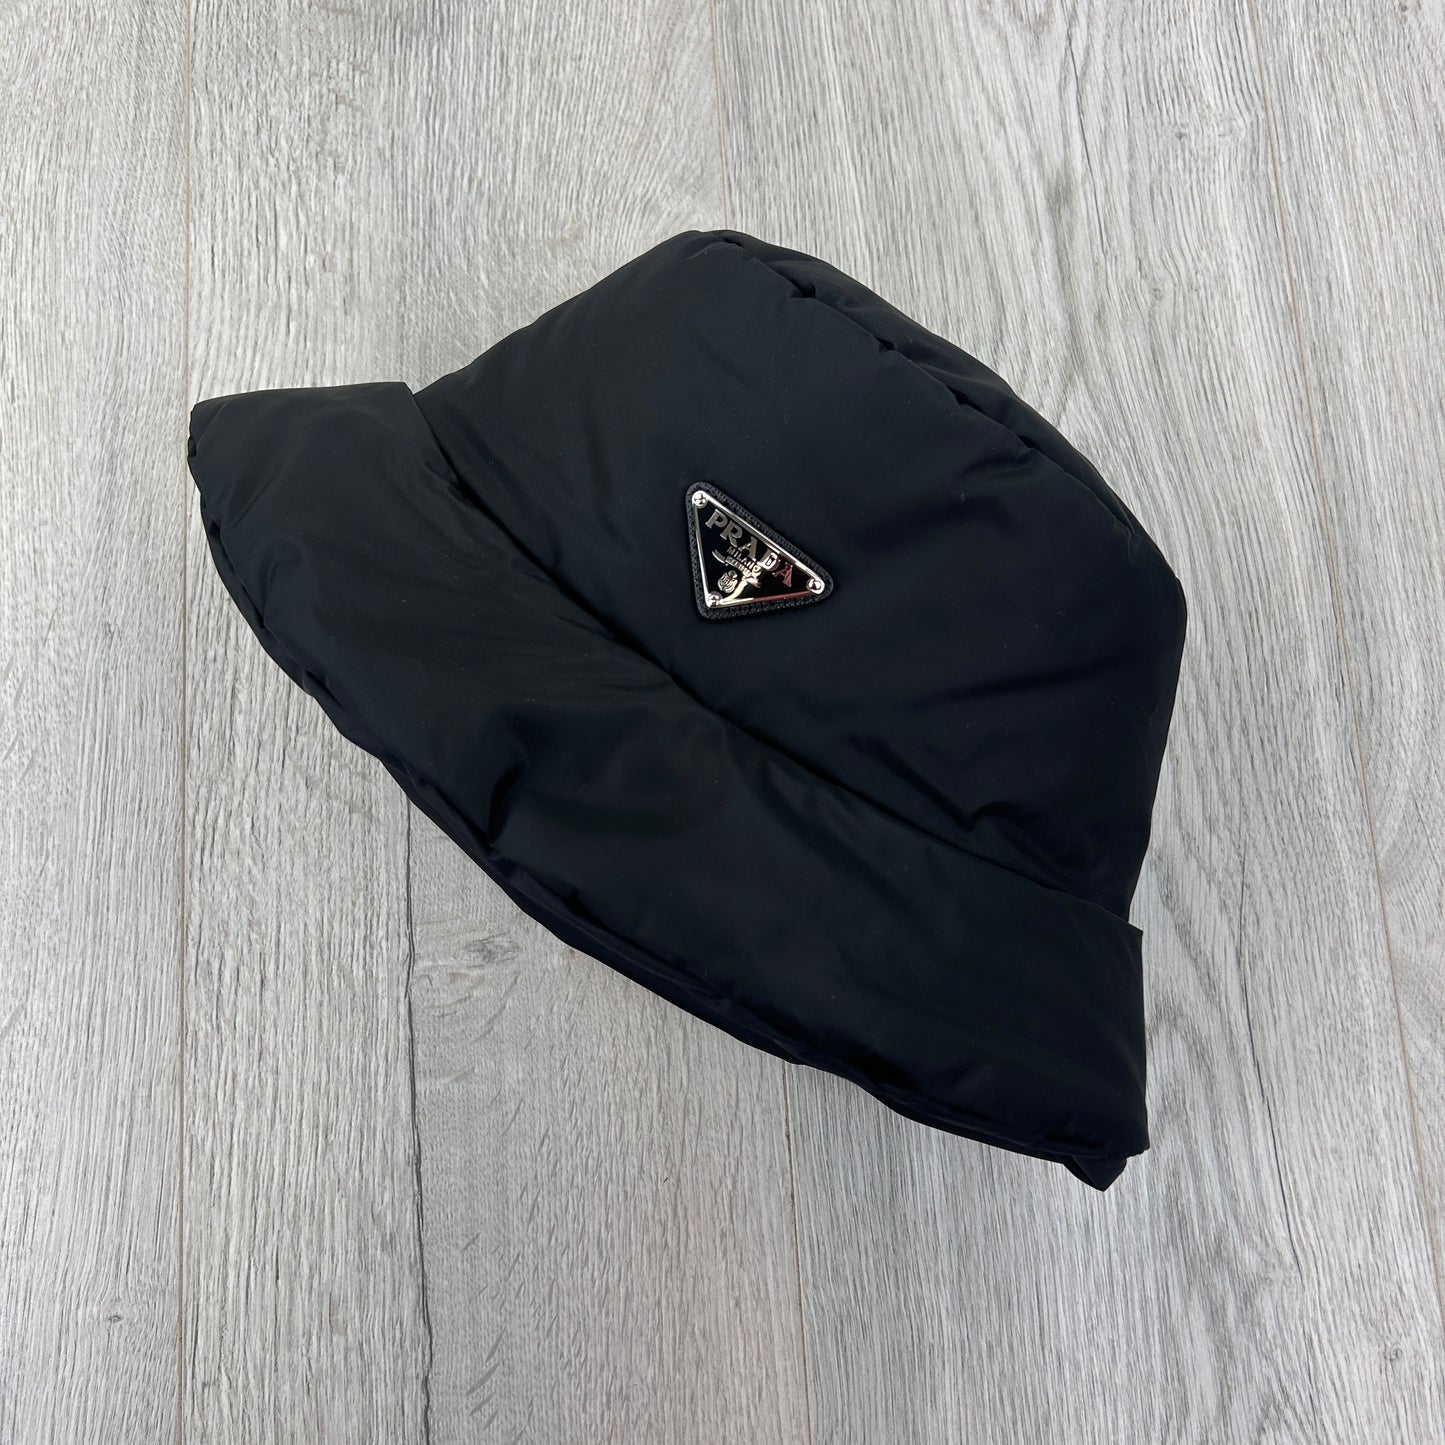 Prada Men’s Black Nylon Padded Bucket Hat